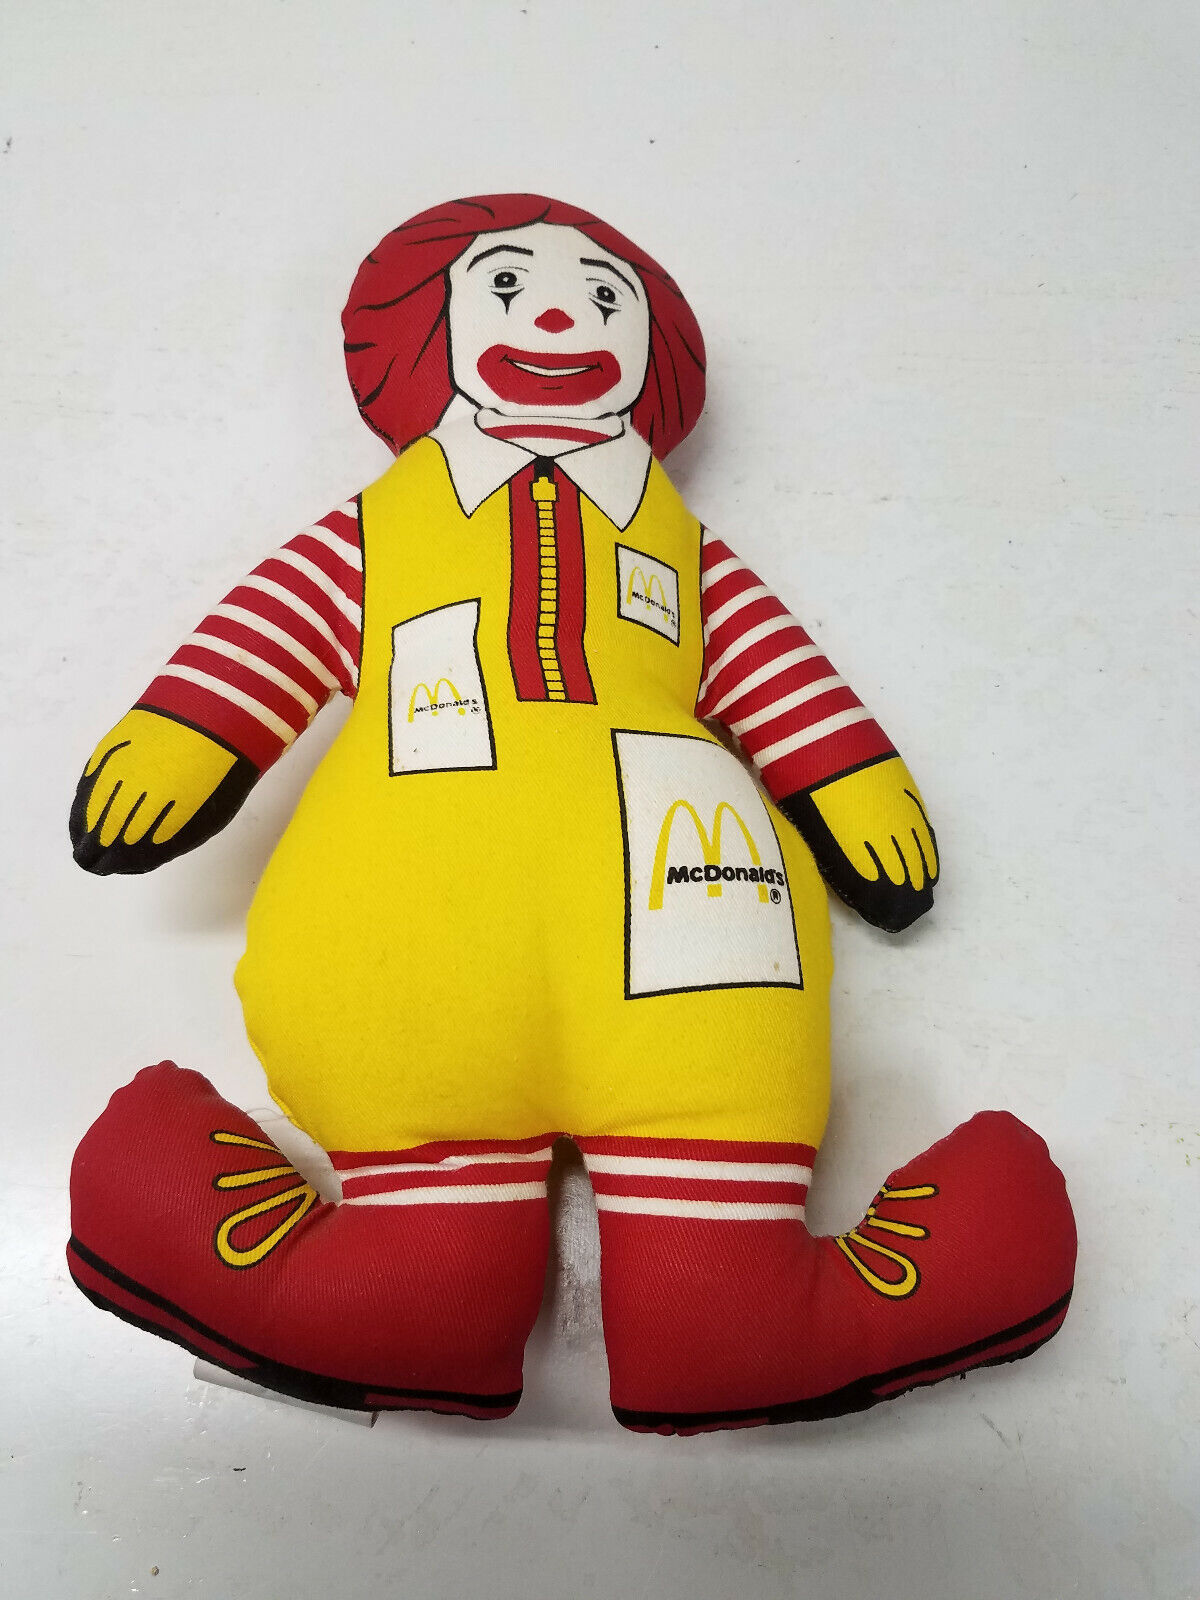 Ronald McDonald McDonald\'s 1984 Vintage Plush Doll Figure Fast Food Advertising 